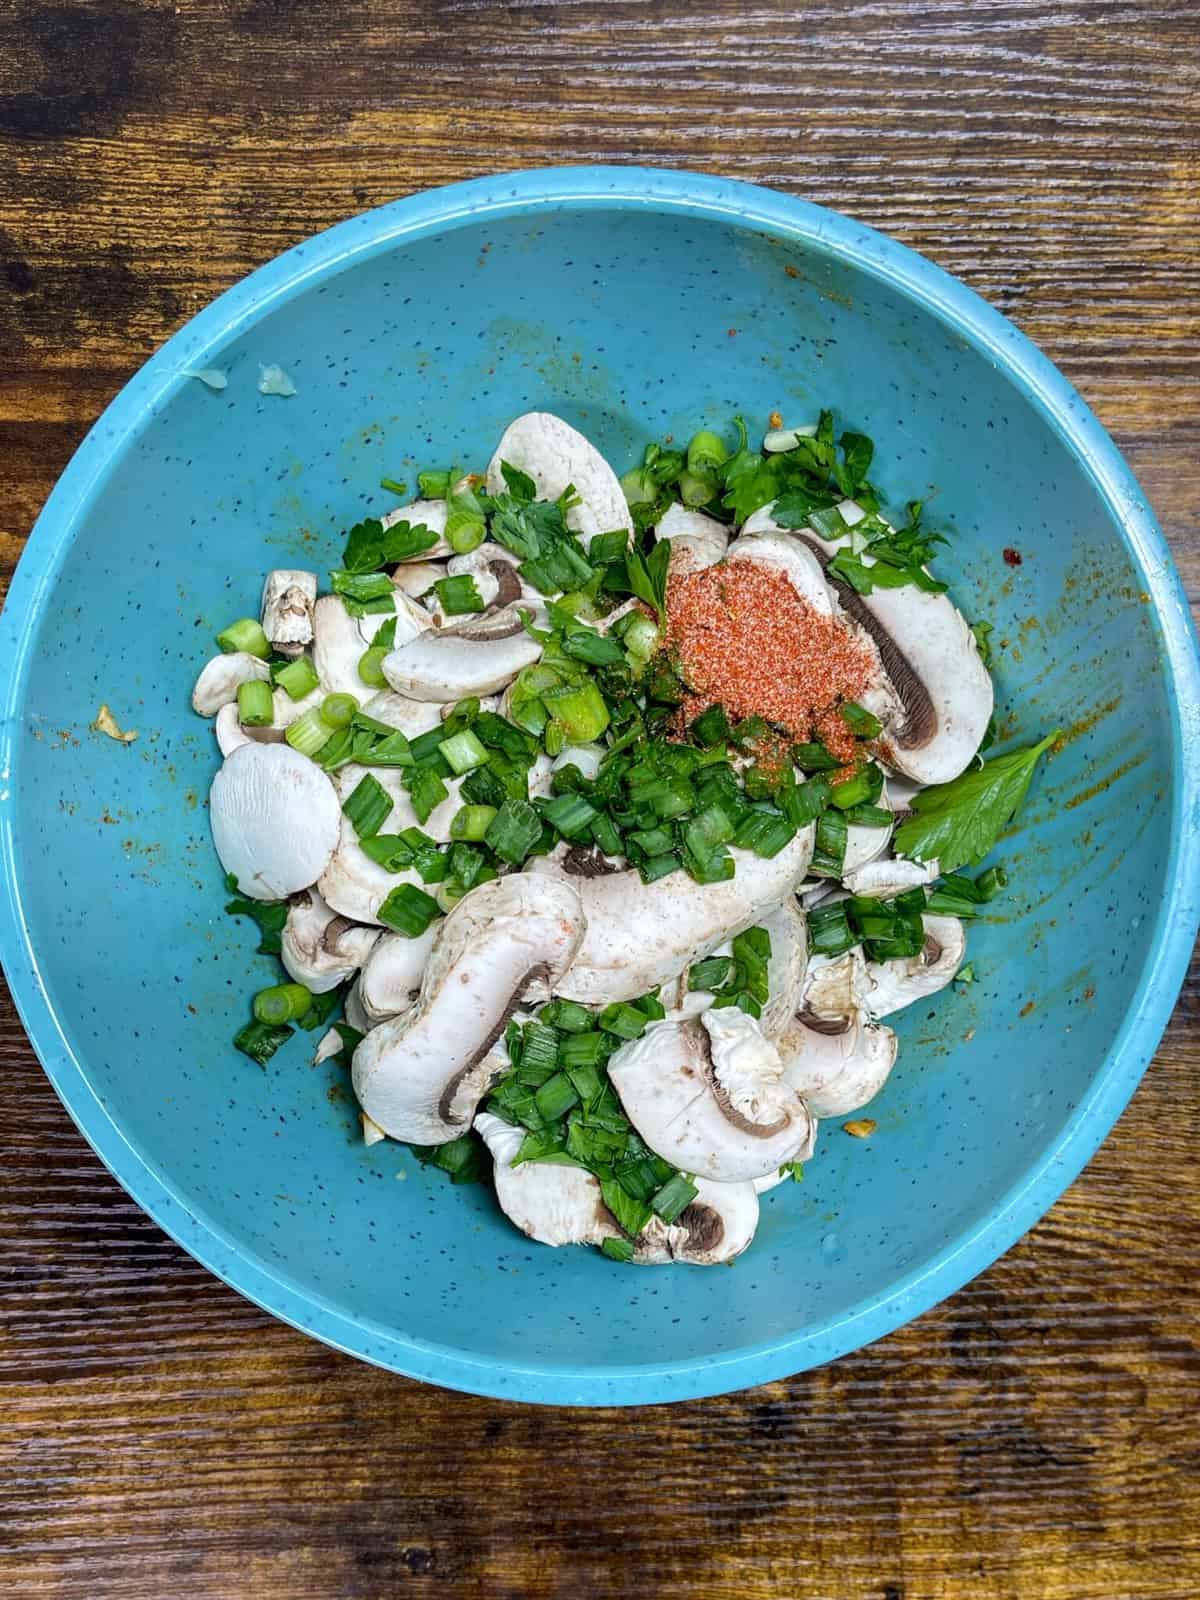 mushrooms, green onion, cilantro, and seasoning in a bowl